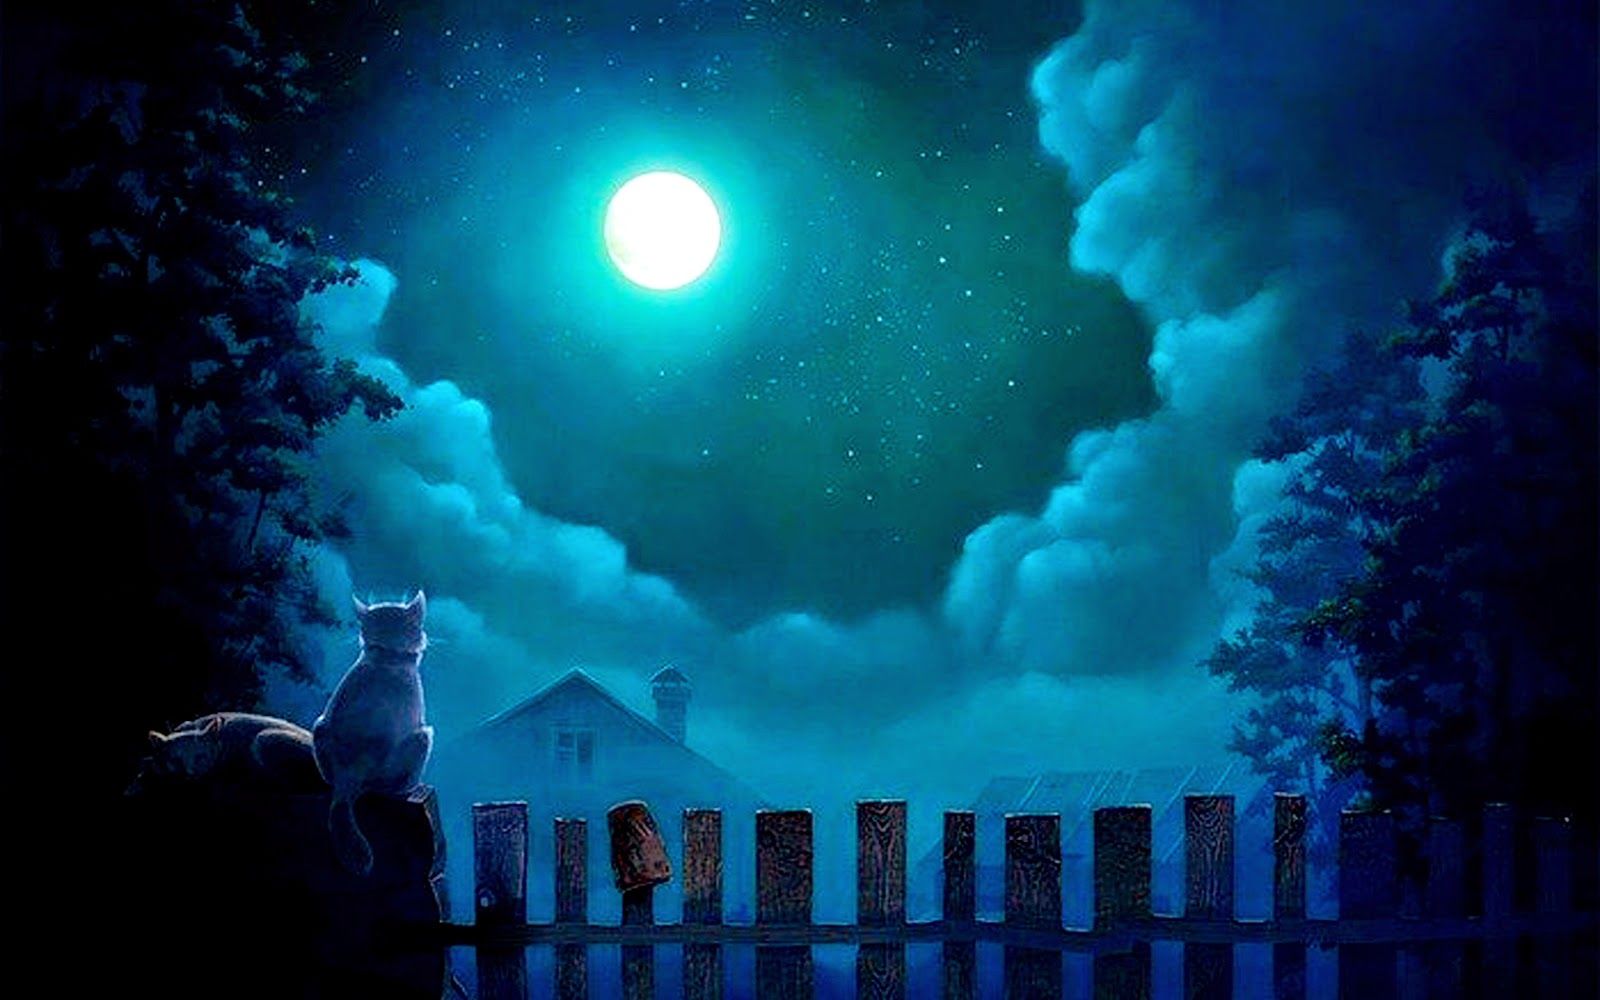 Beauty of moonlight at night sky near sea poetic nature image